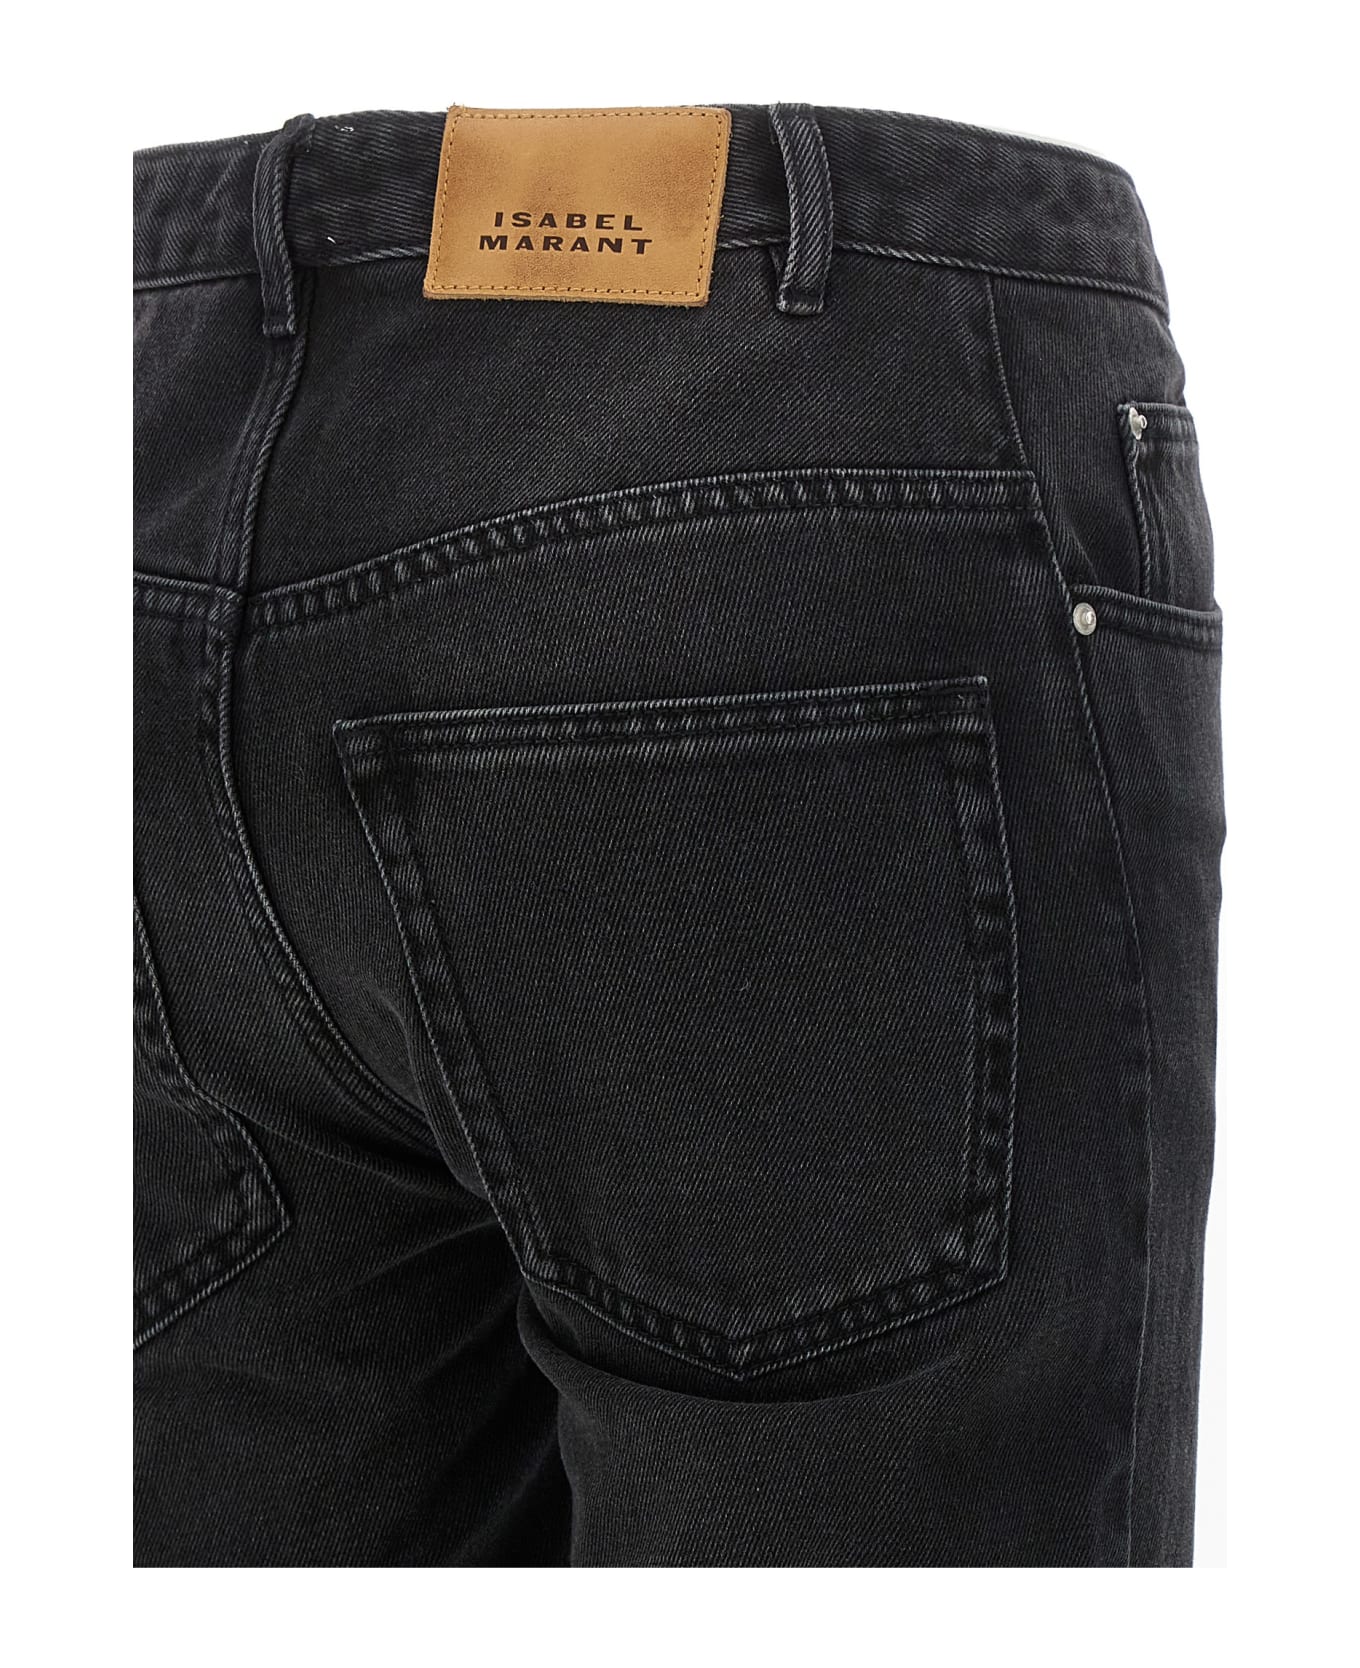 Isabel Marant Jemina High Waist Jeans - FADED BLACK